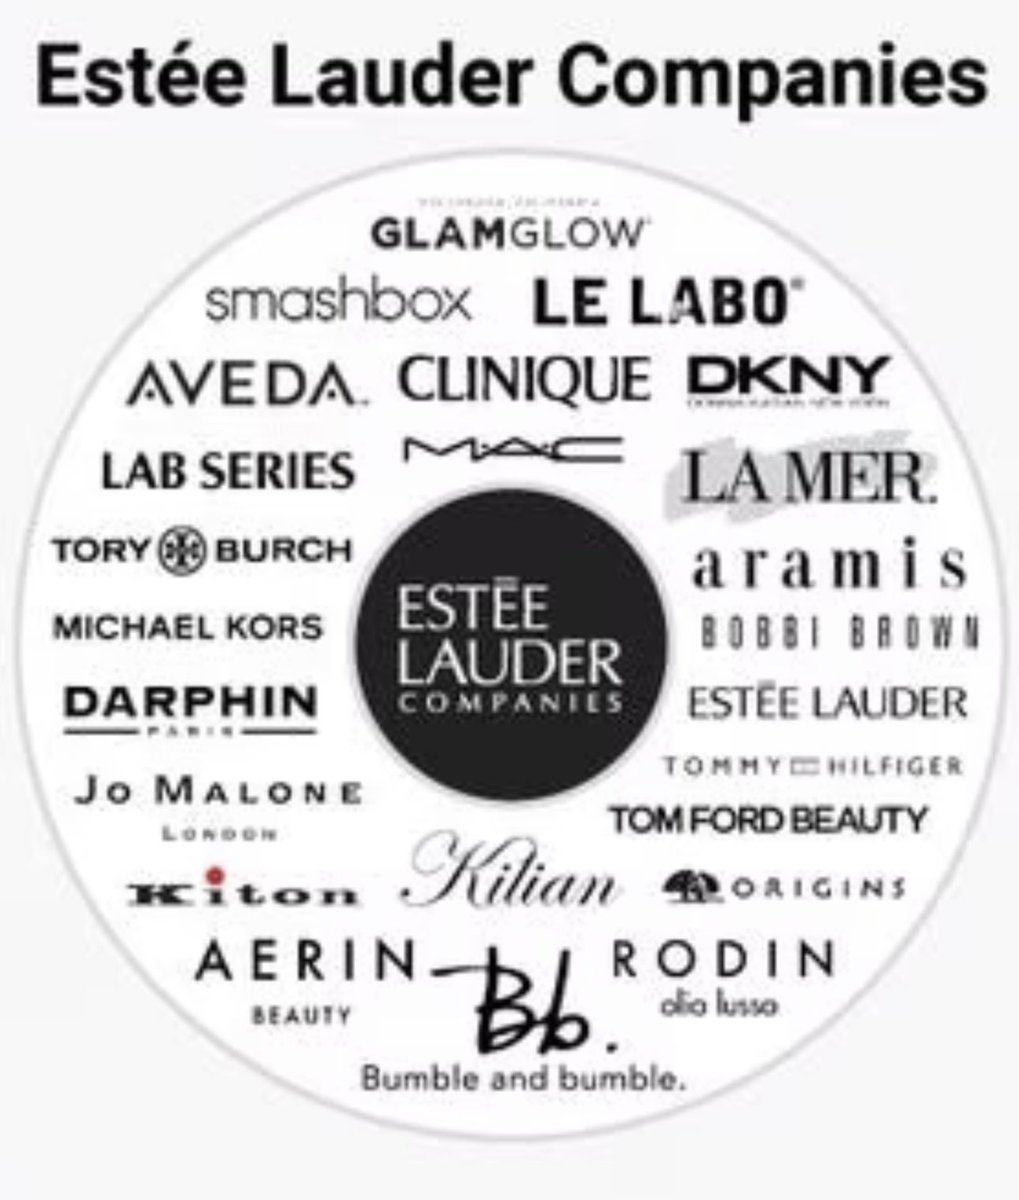 #BoycottEsteeLauder @EsteeLauder including all these brands: